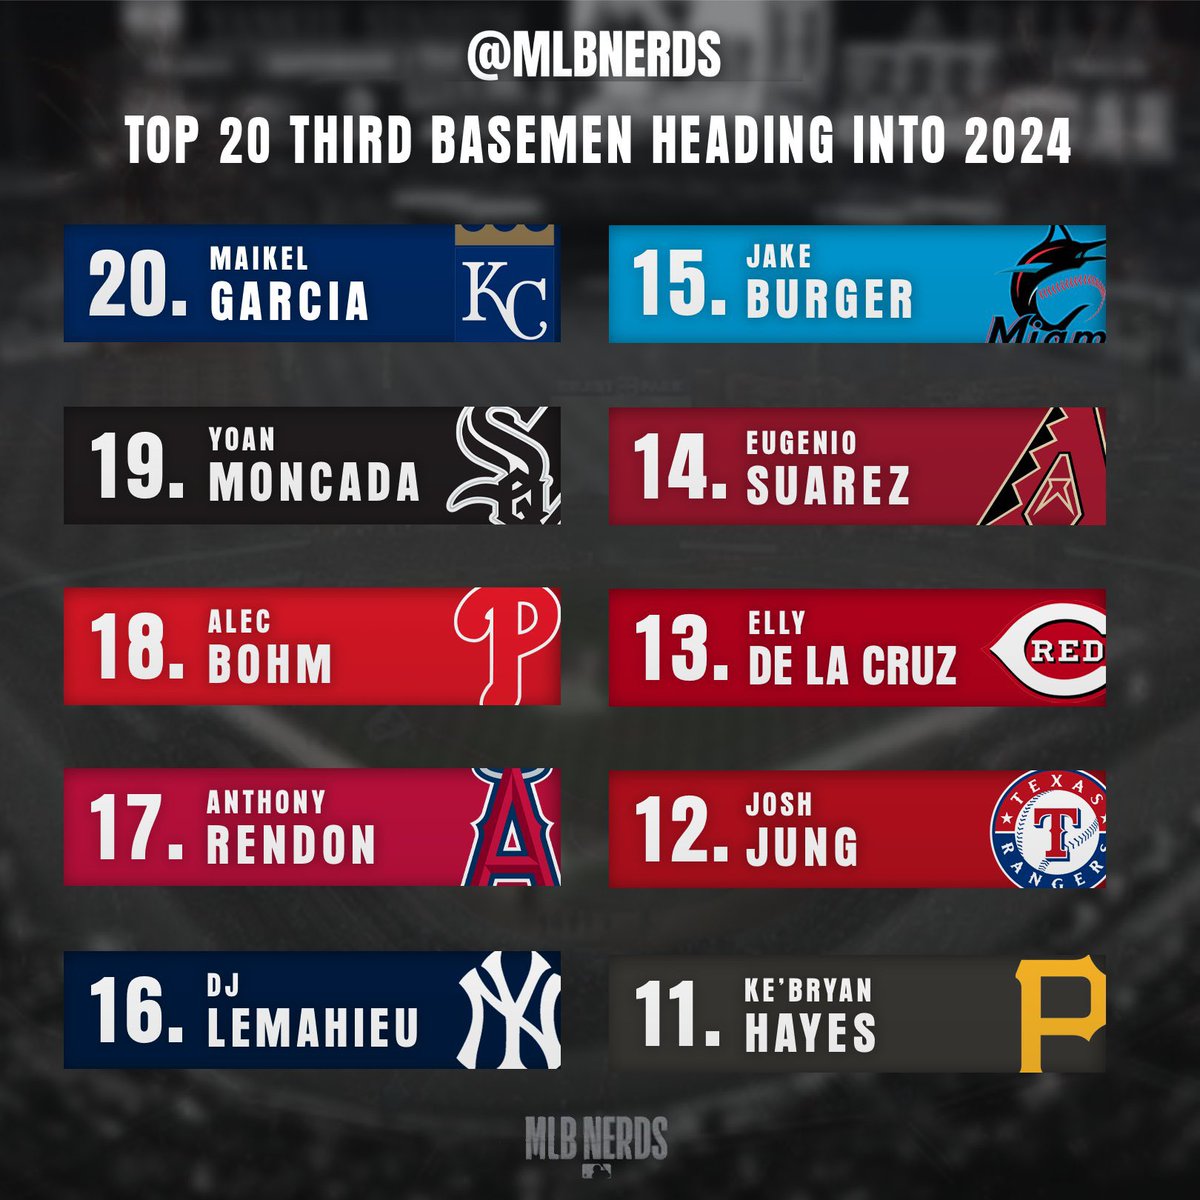 Top 20 Third Basemen (20-11) for the 2024 season.